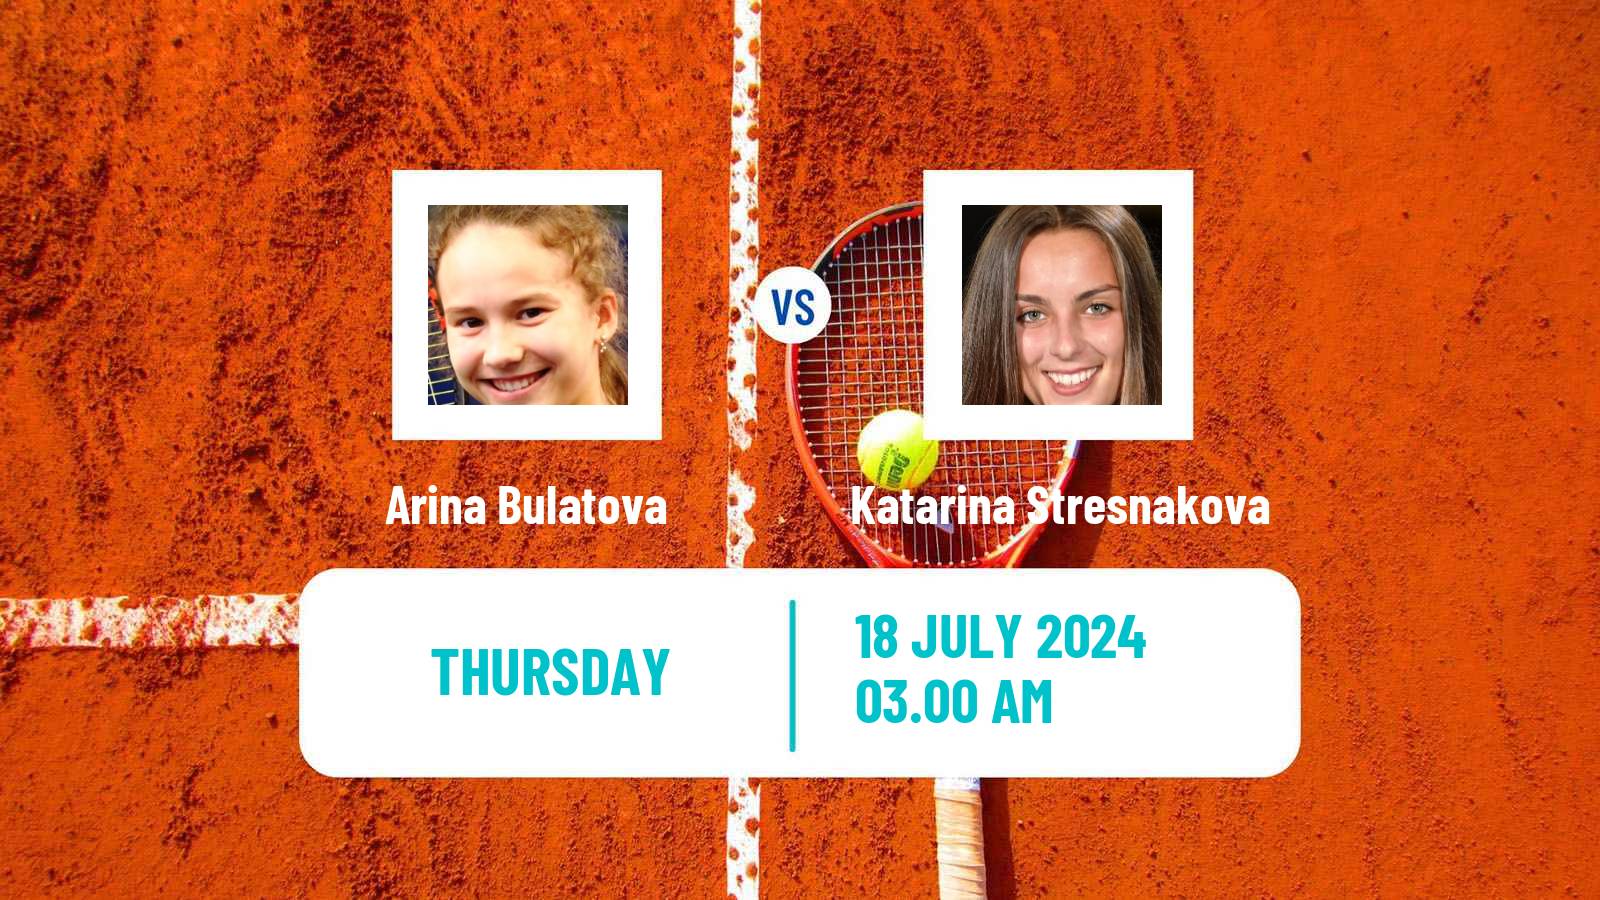 Tennis ITF W15 Kursumlijska Banja 12 Women Arina Bulatova - Katarina Stresnakova